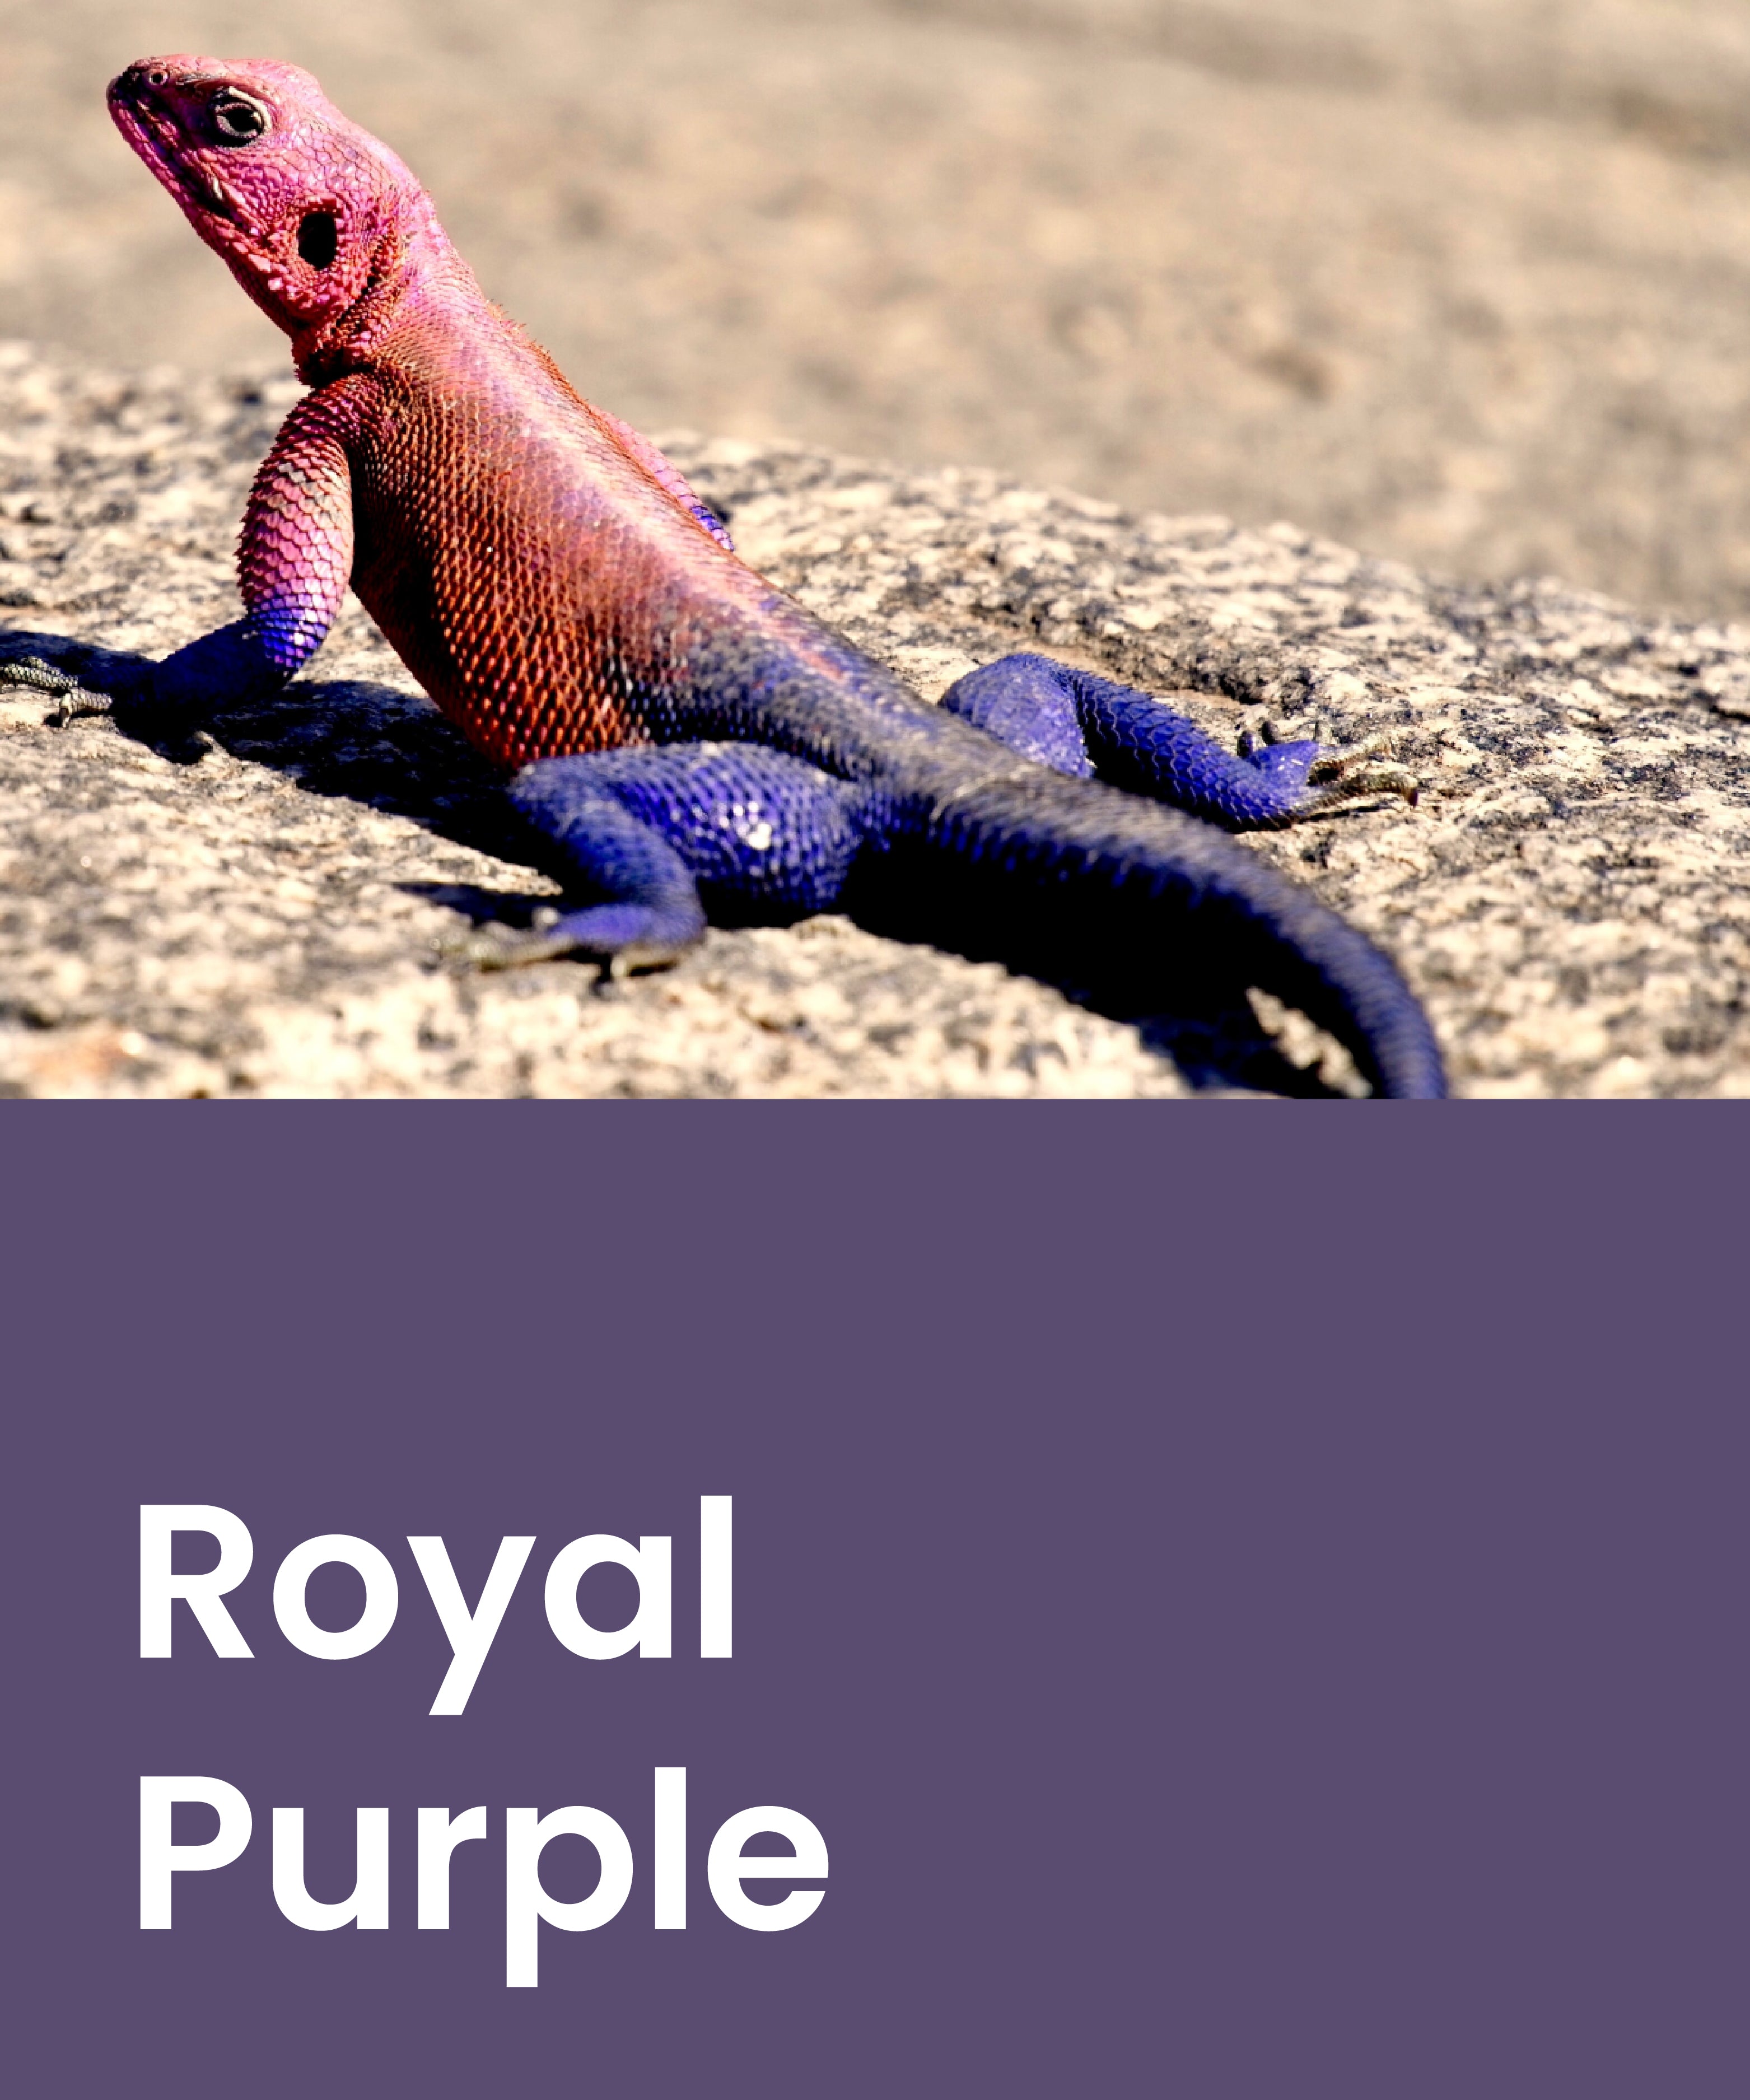 Phailozoo purple reptile enclosure